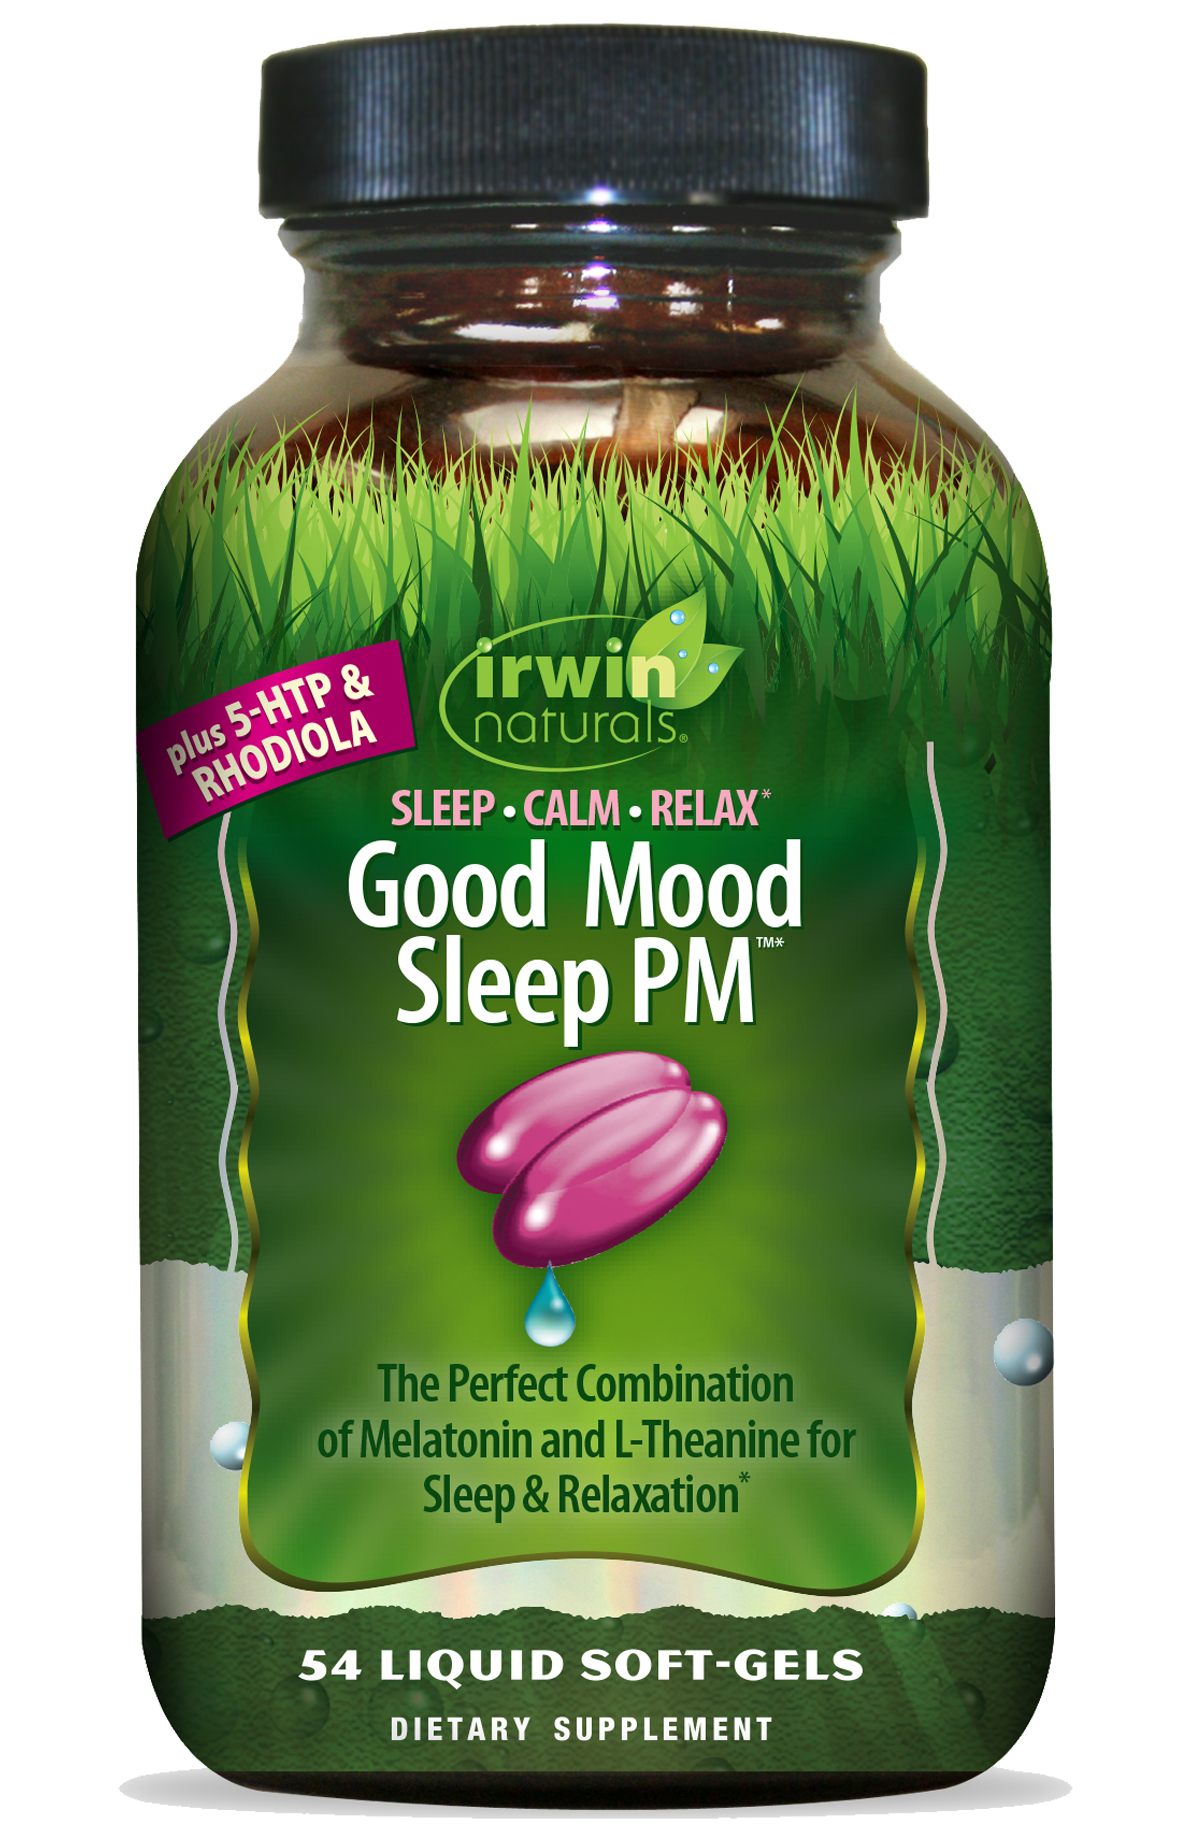 Good Mood Sleep PM